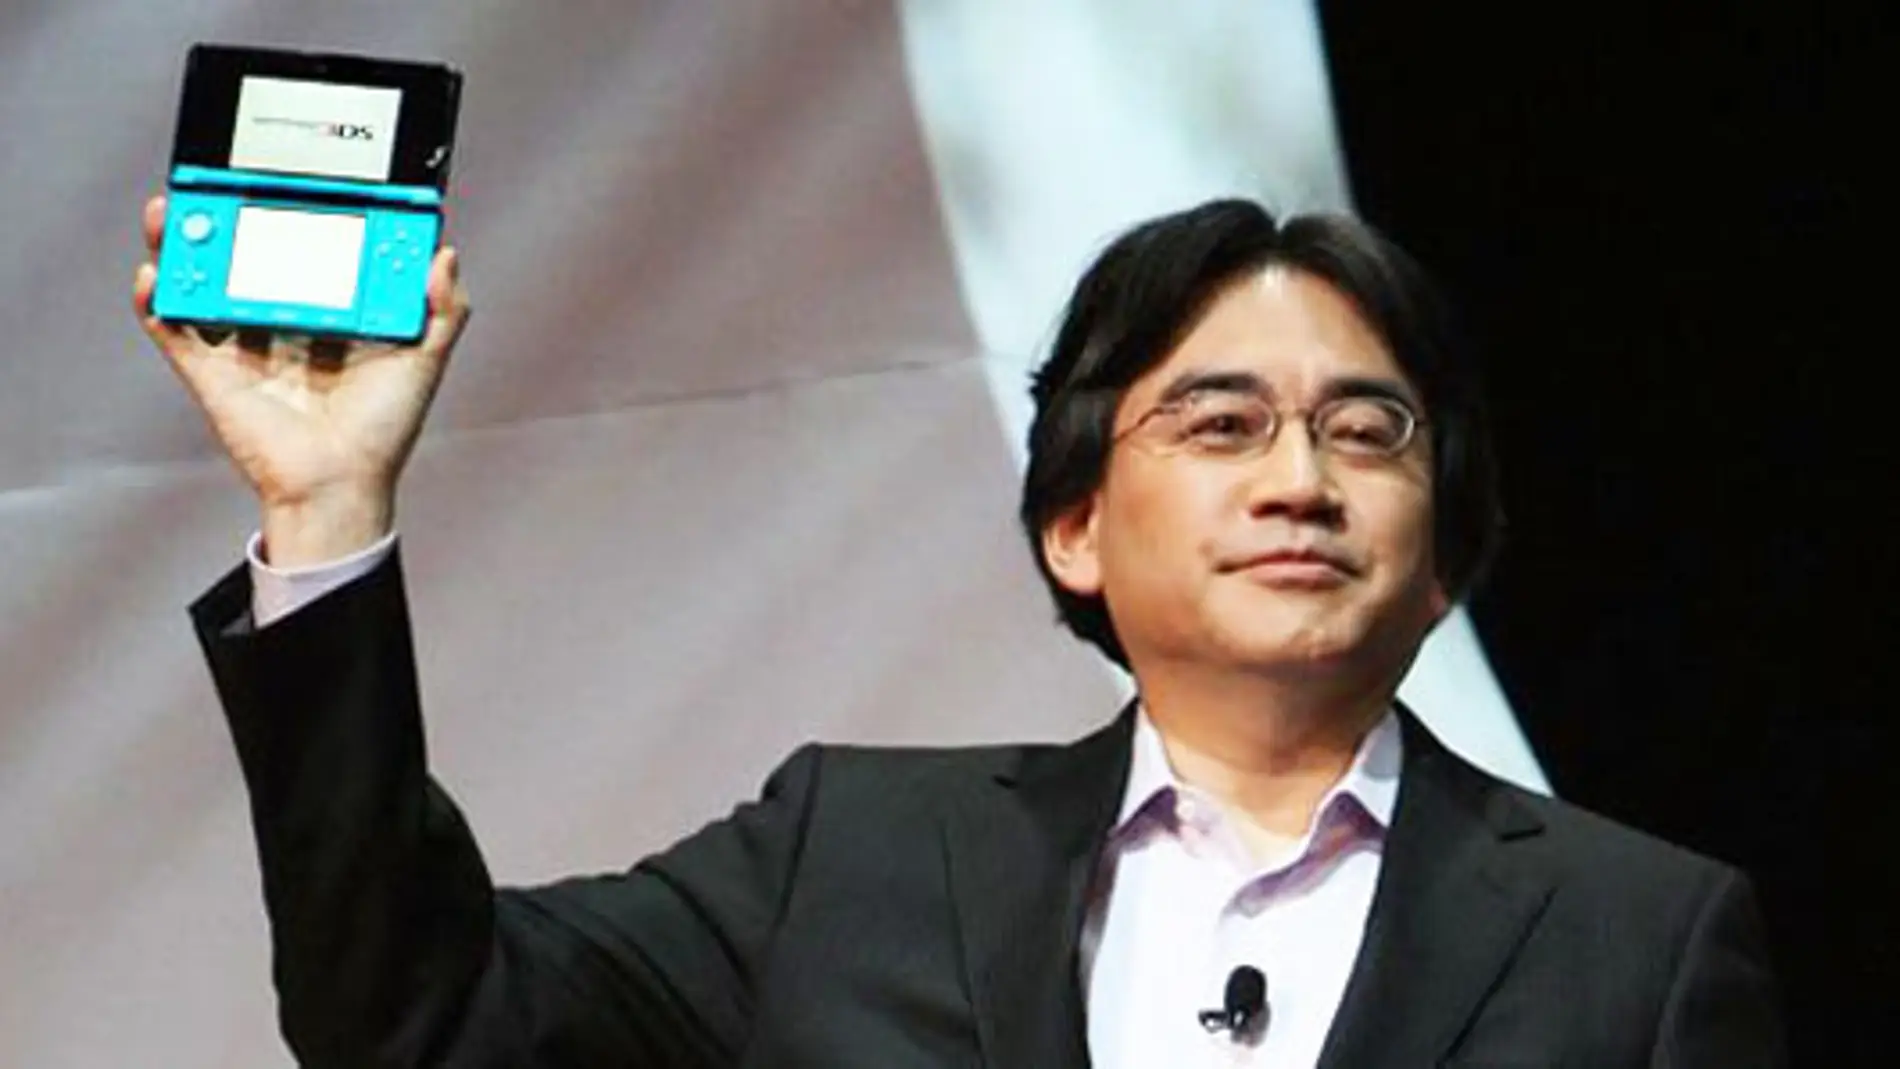  El presidente de Nintendo Satoru Iwata.